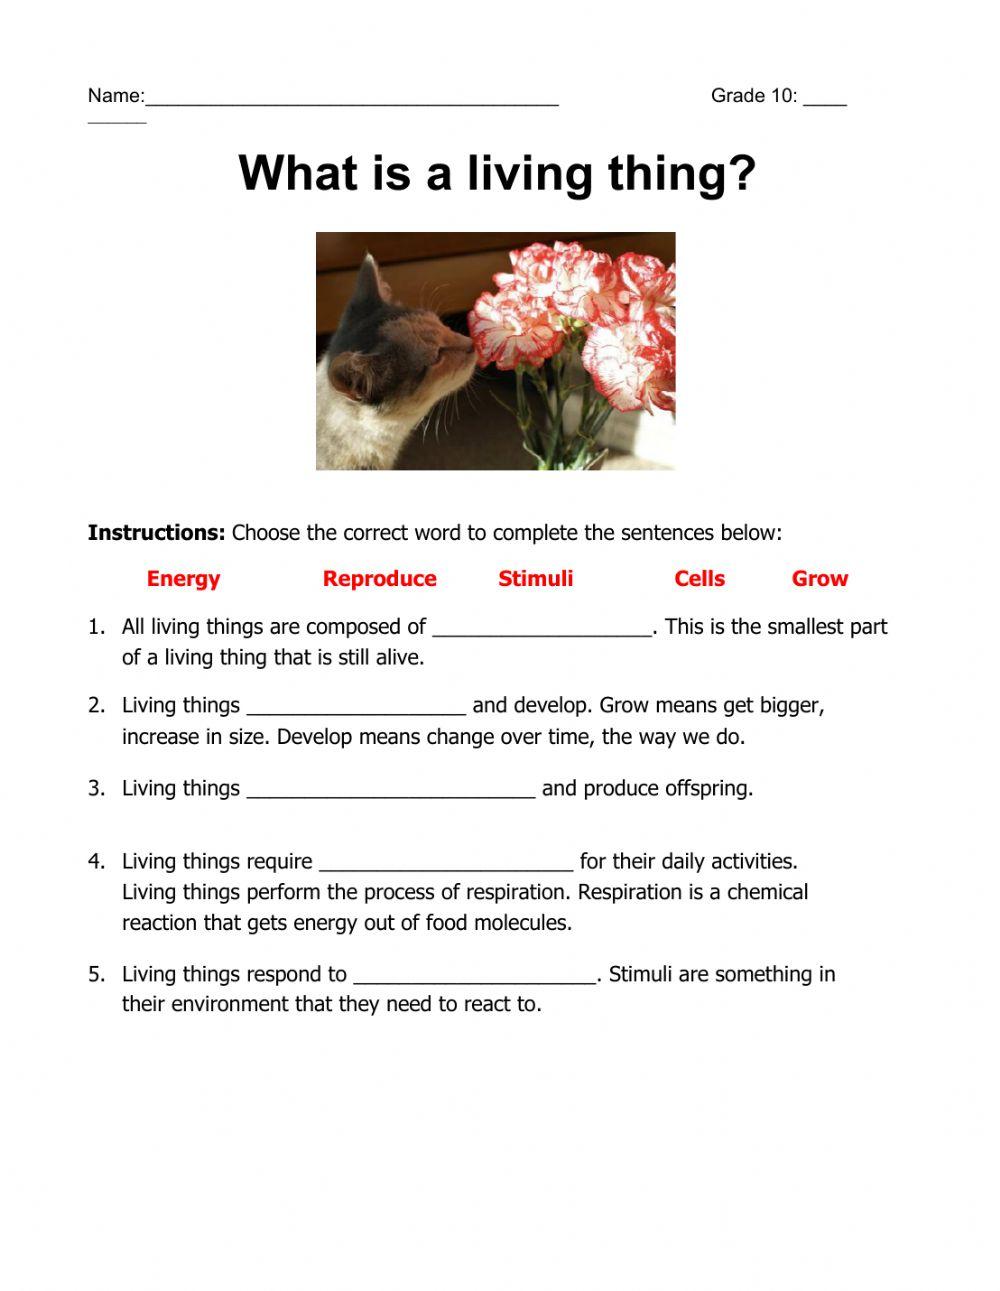 Characteristics if Living Things